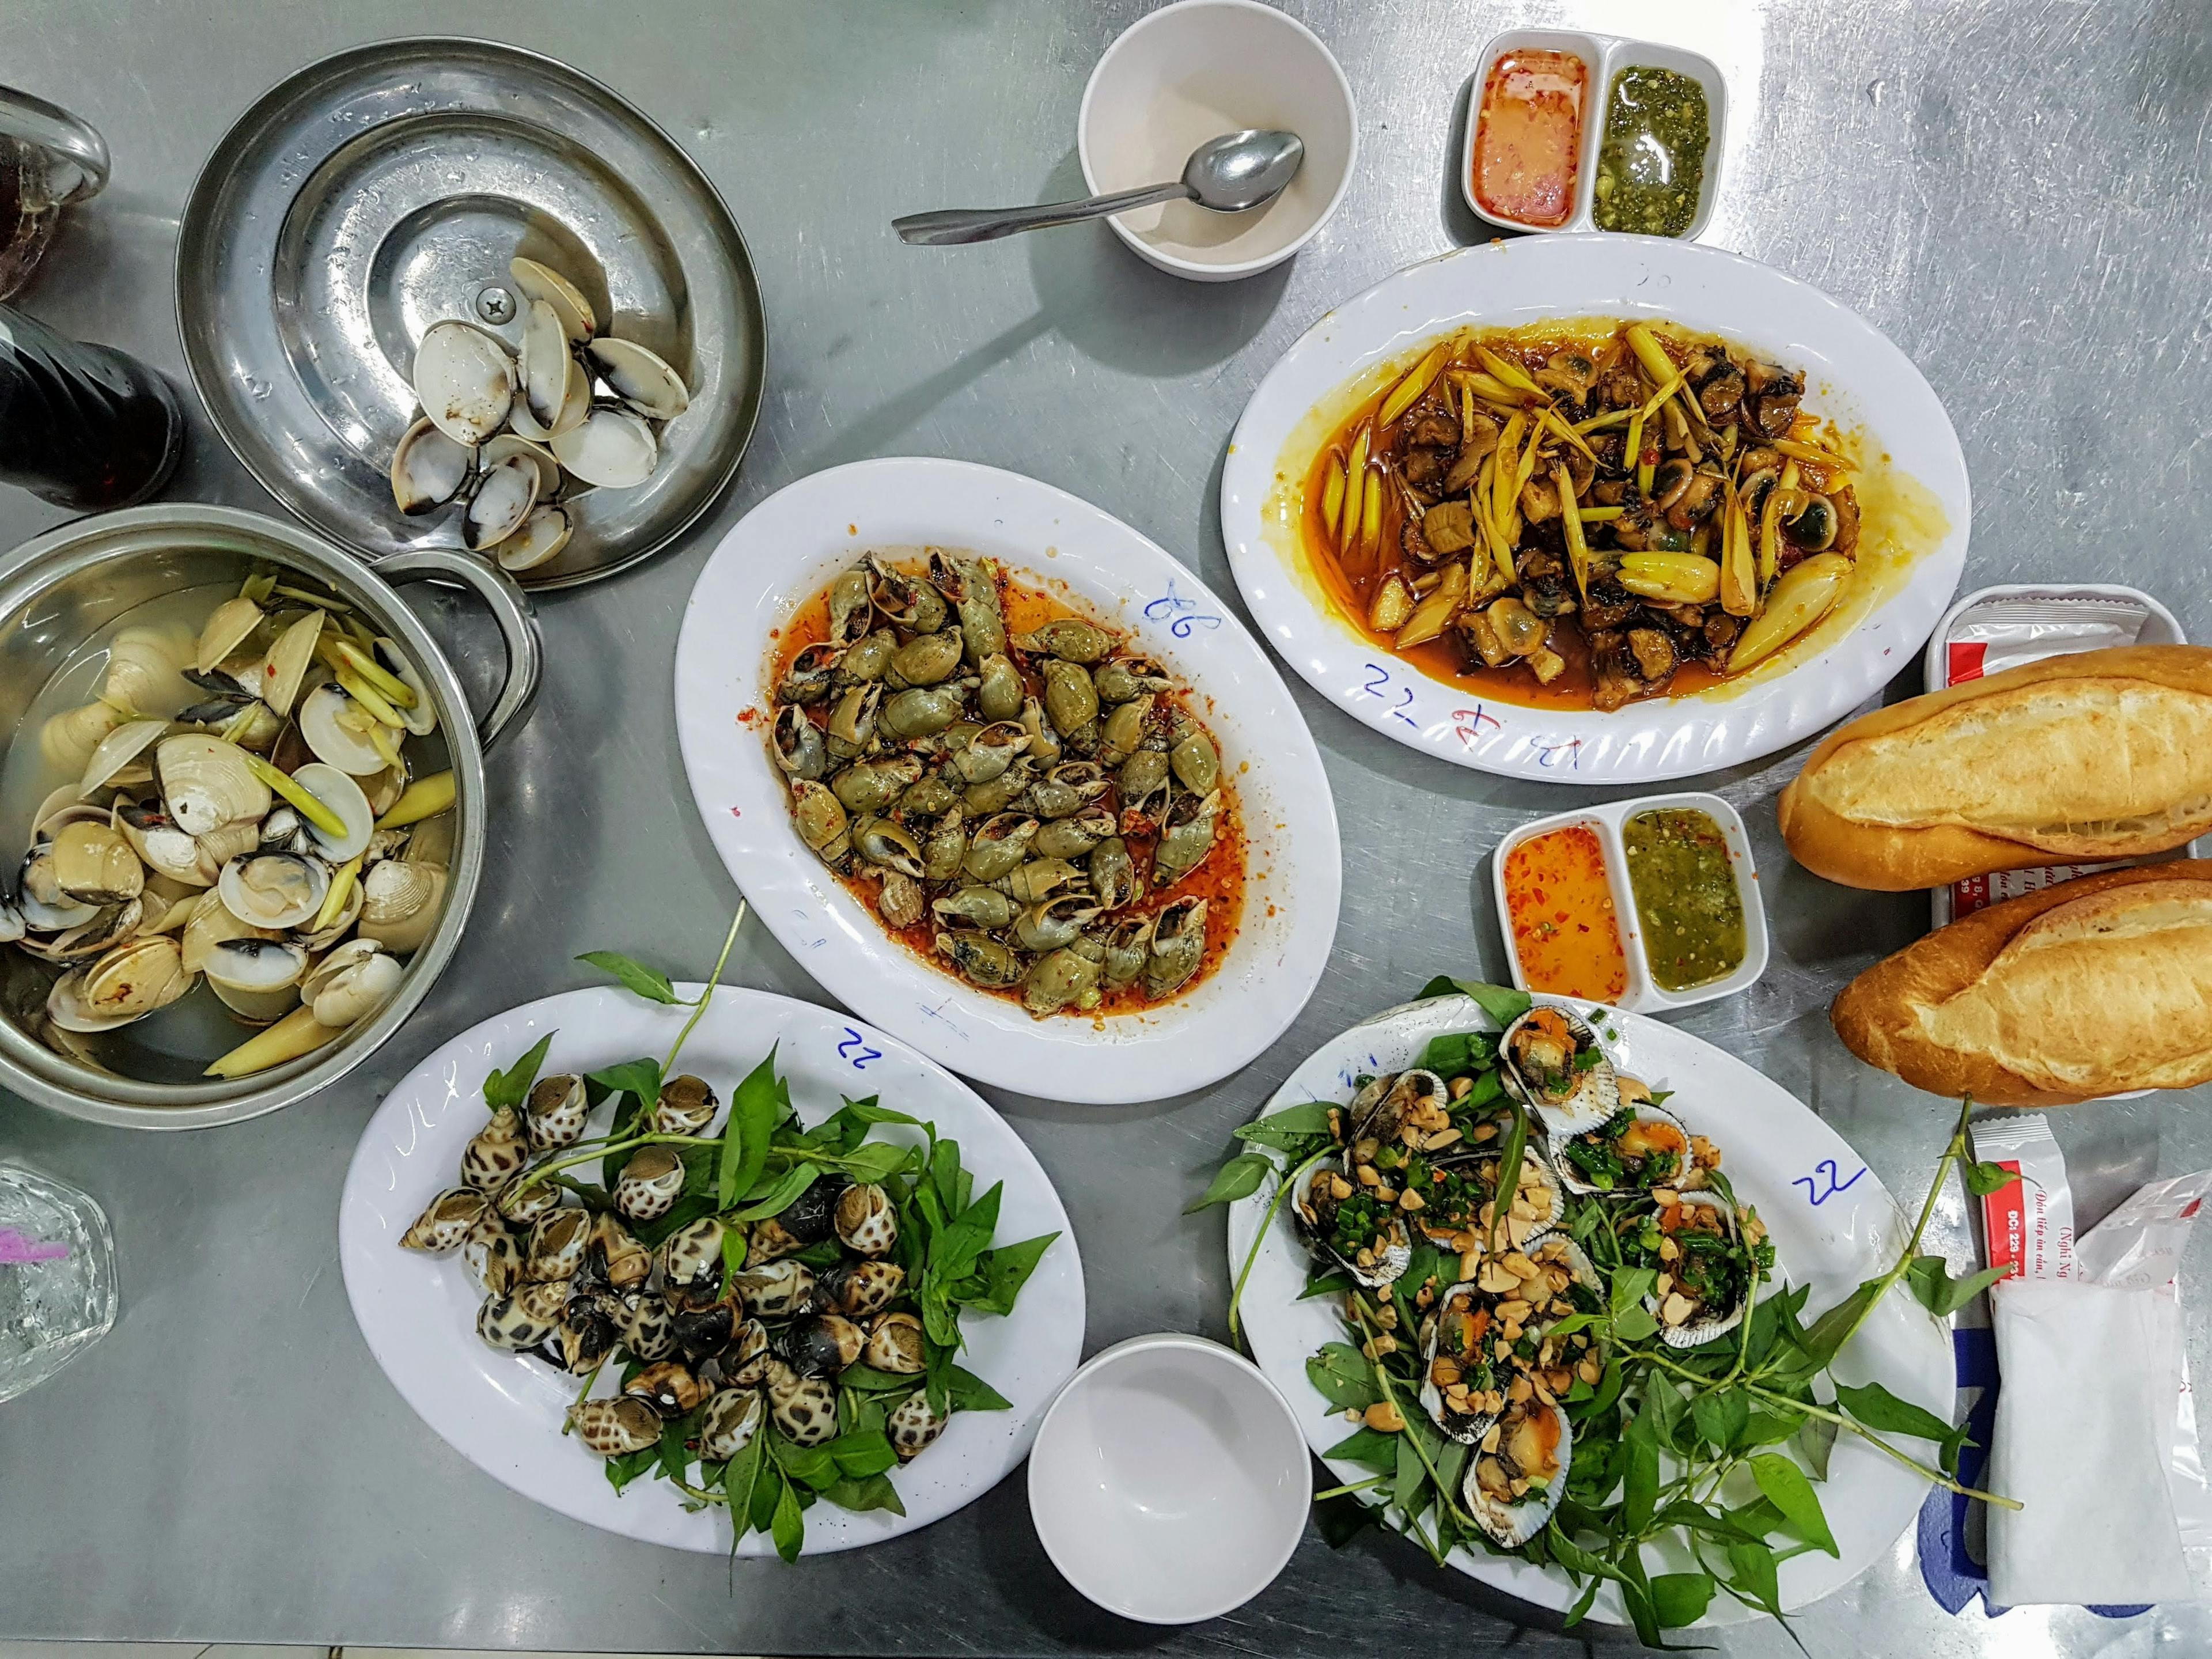 Cheap eats in Saigon by @jaunty_jan